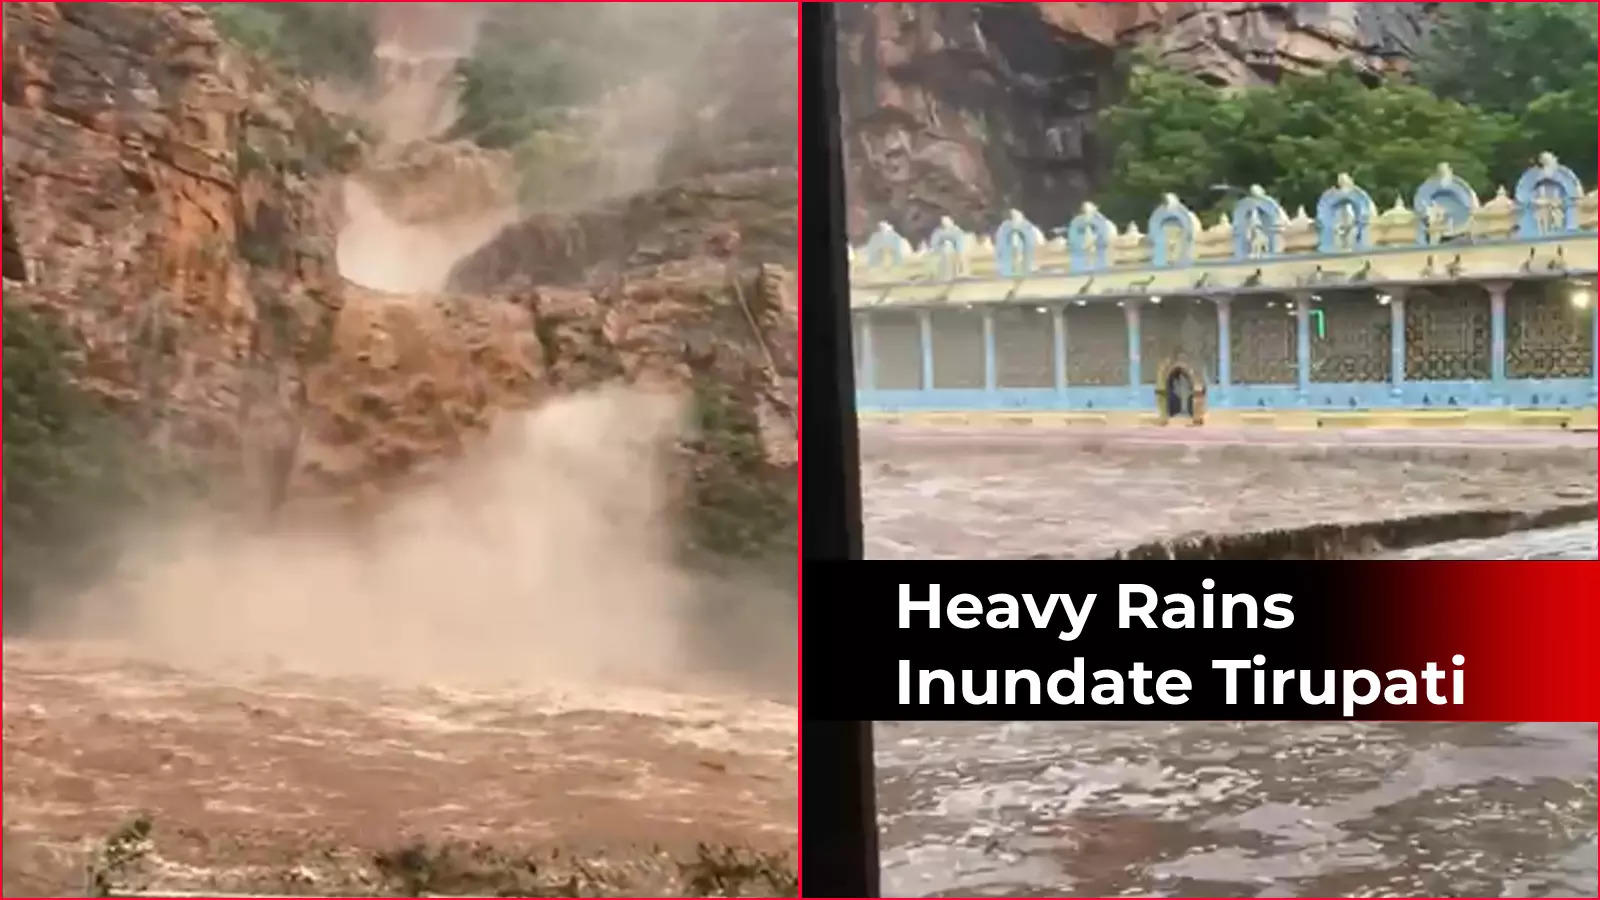 Andhra Pradesh: Heavy rains inundate Tirupati, Chittoor | TOI ...